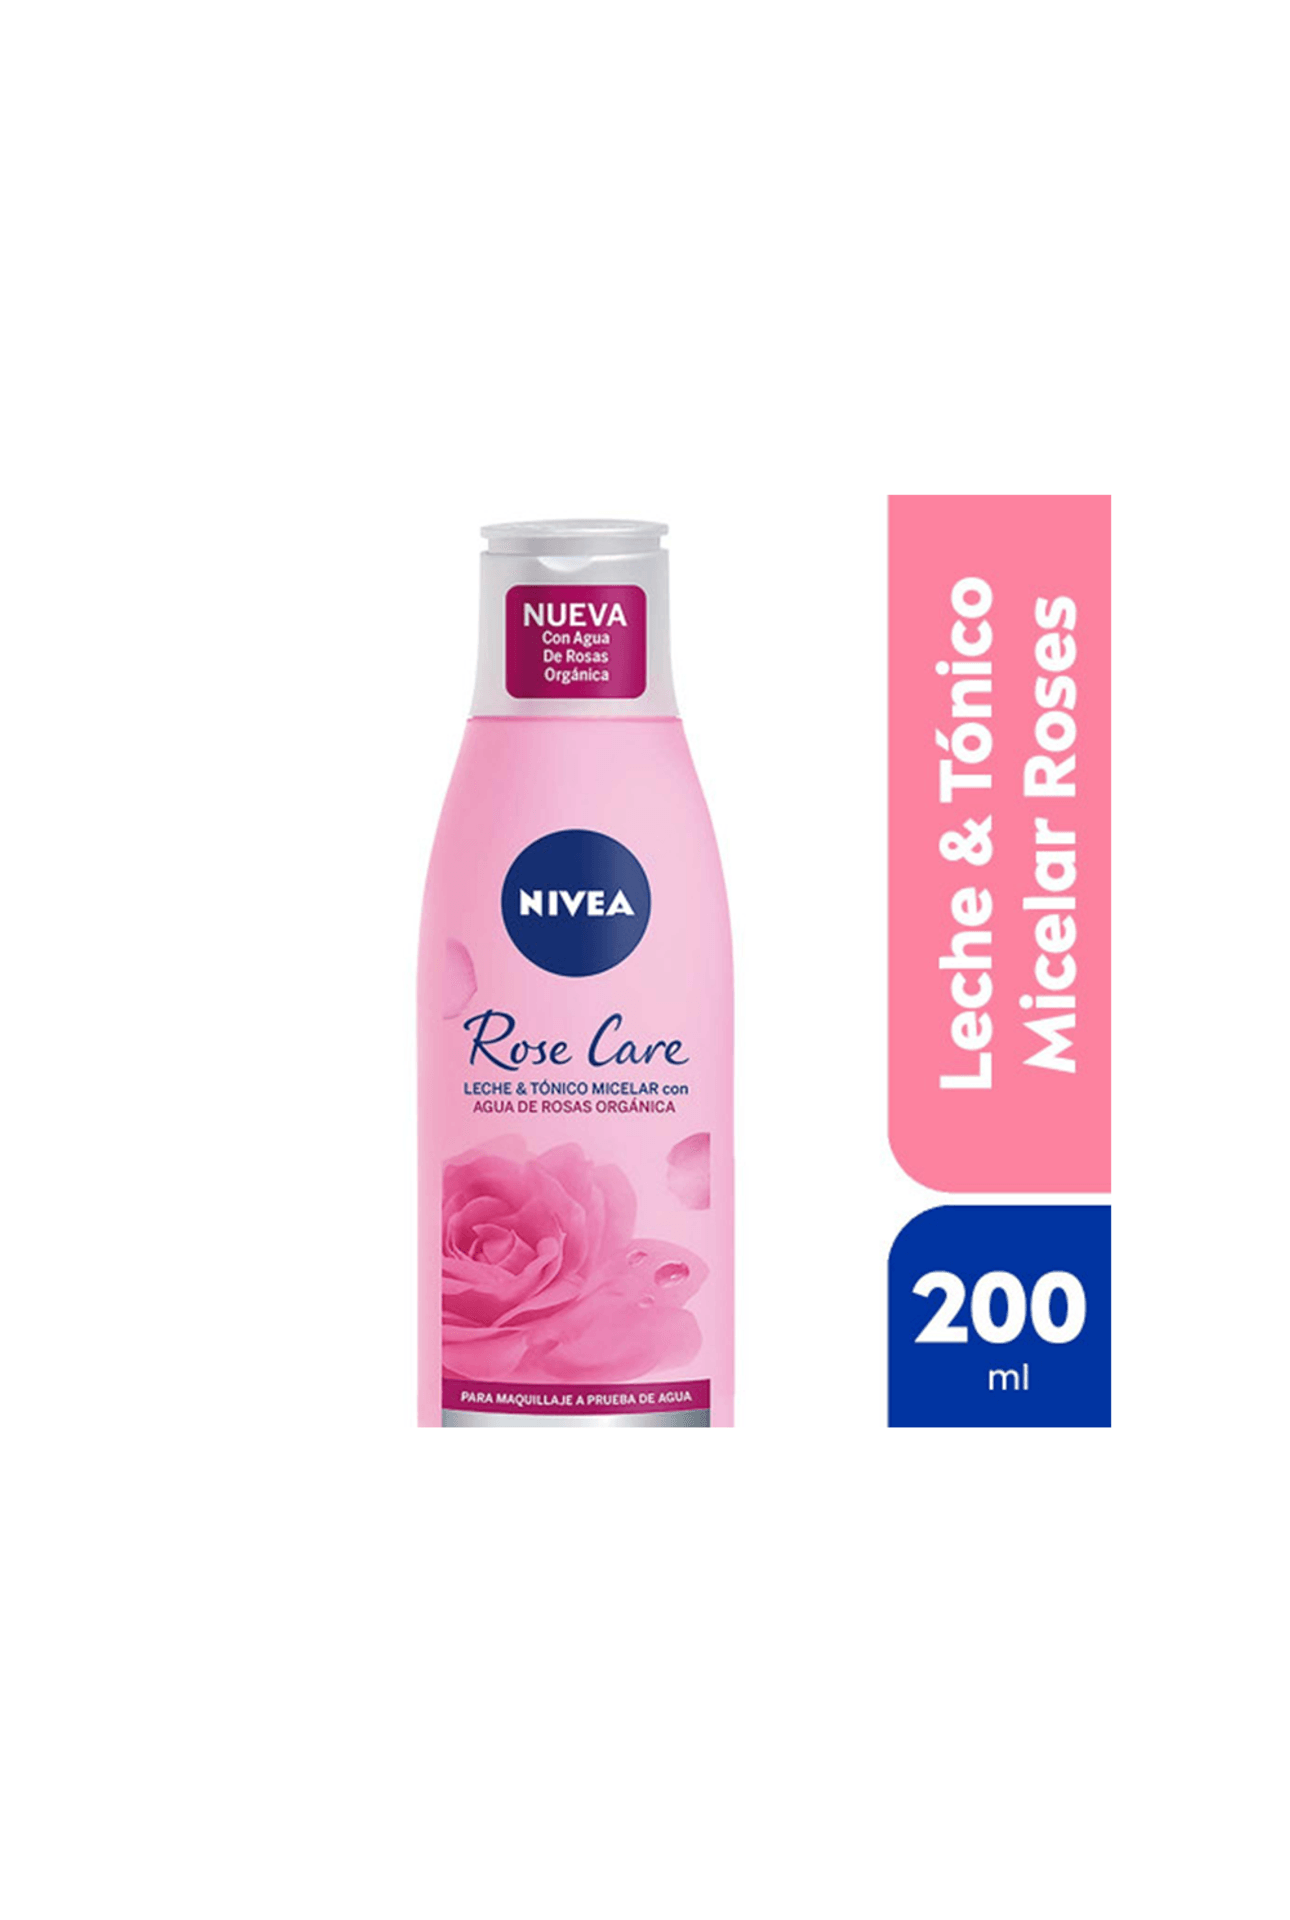 Nivea-Leche-Nivea-Rose-Care---Tonico-Micelar-x-200-ml-4005900773845_img1